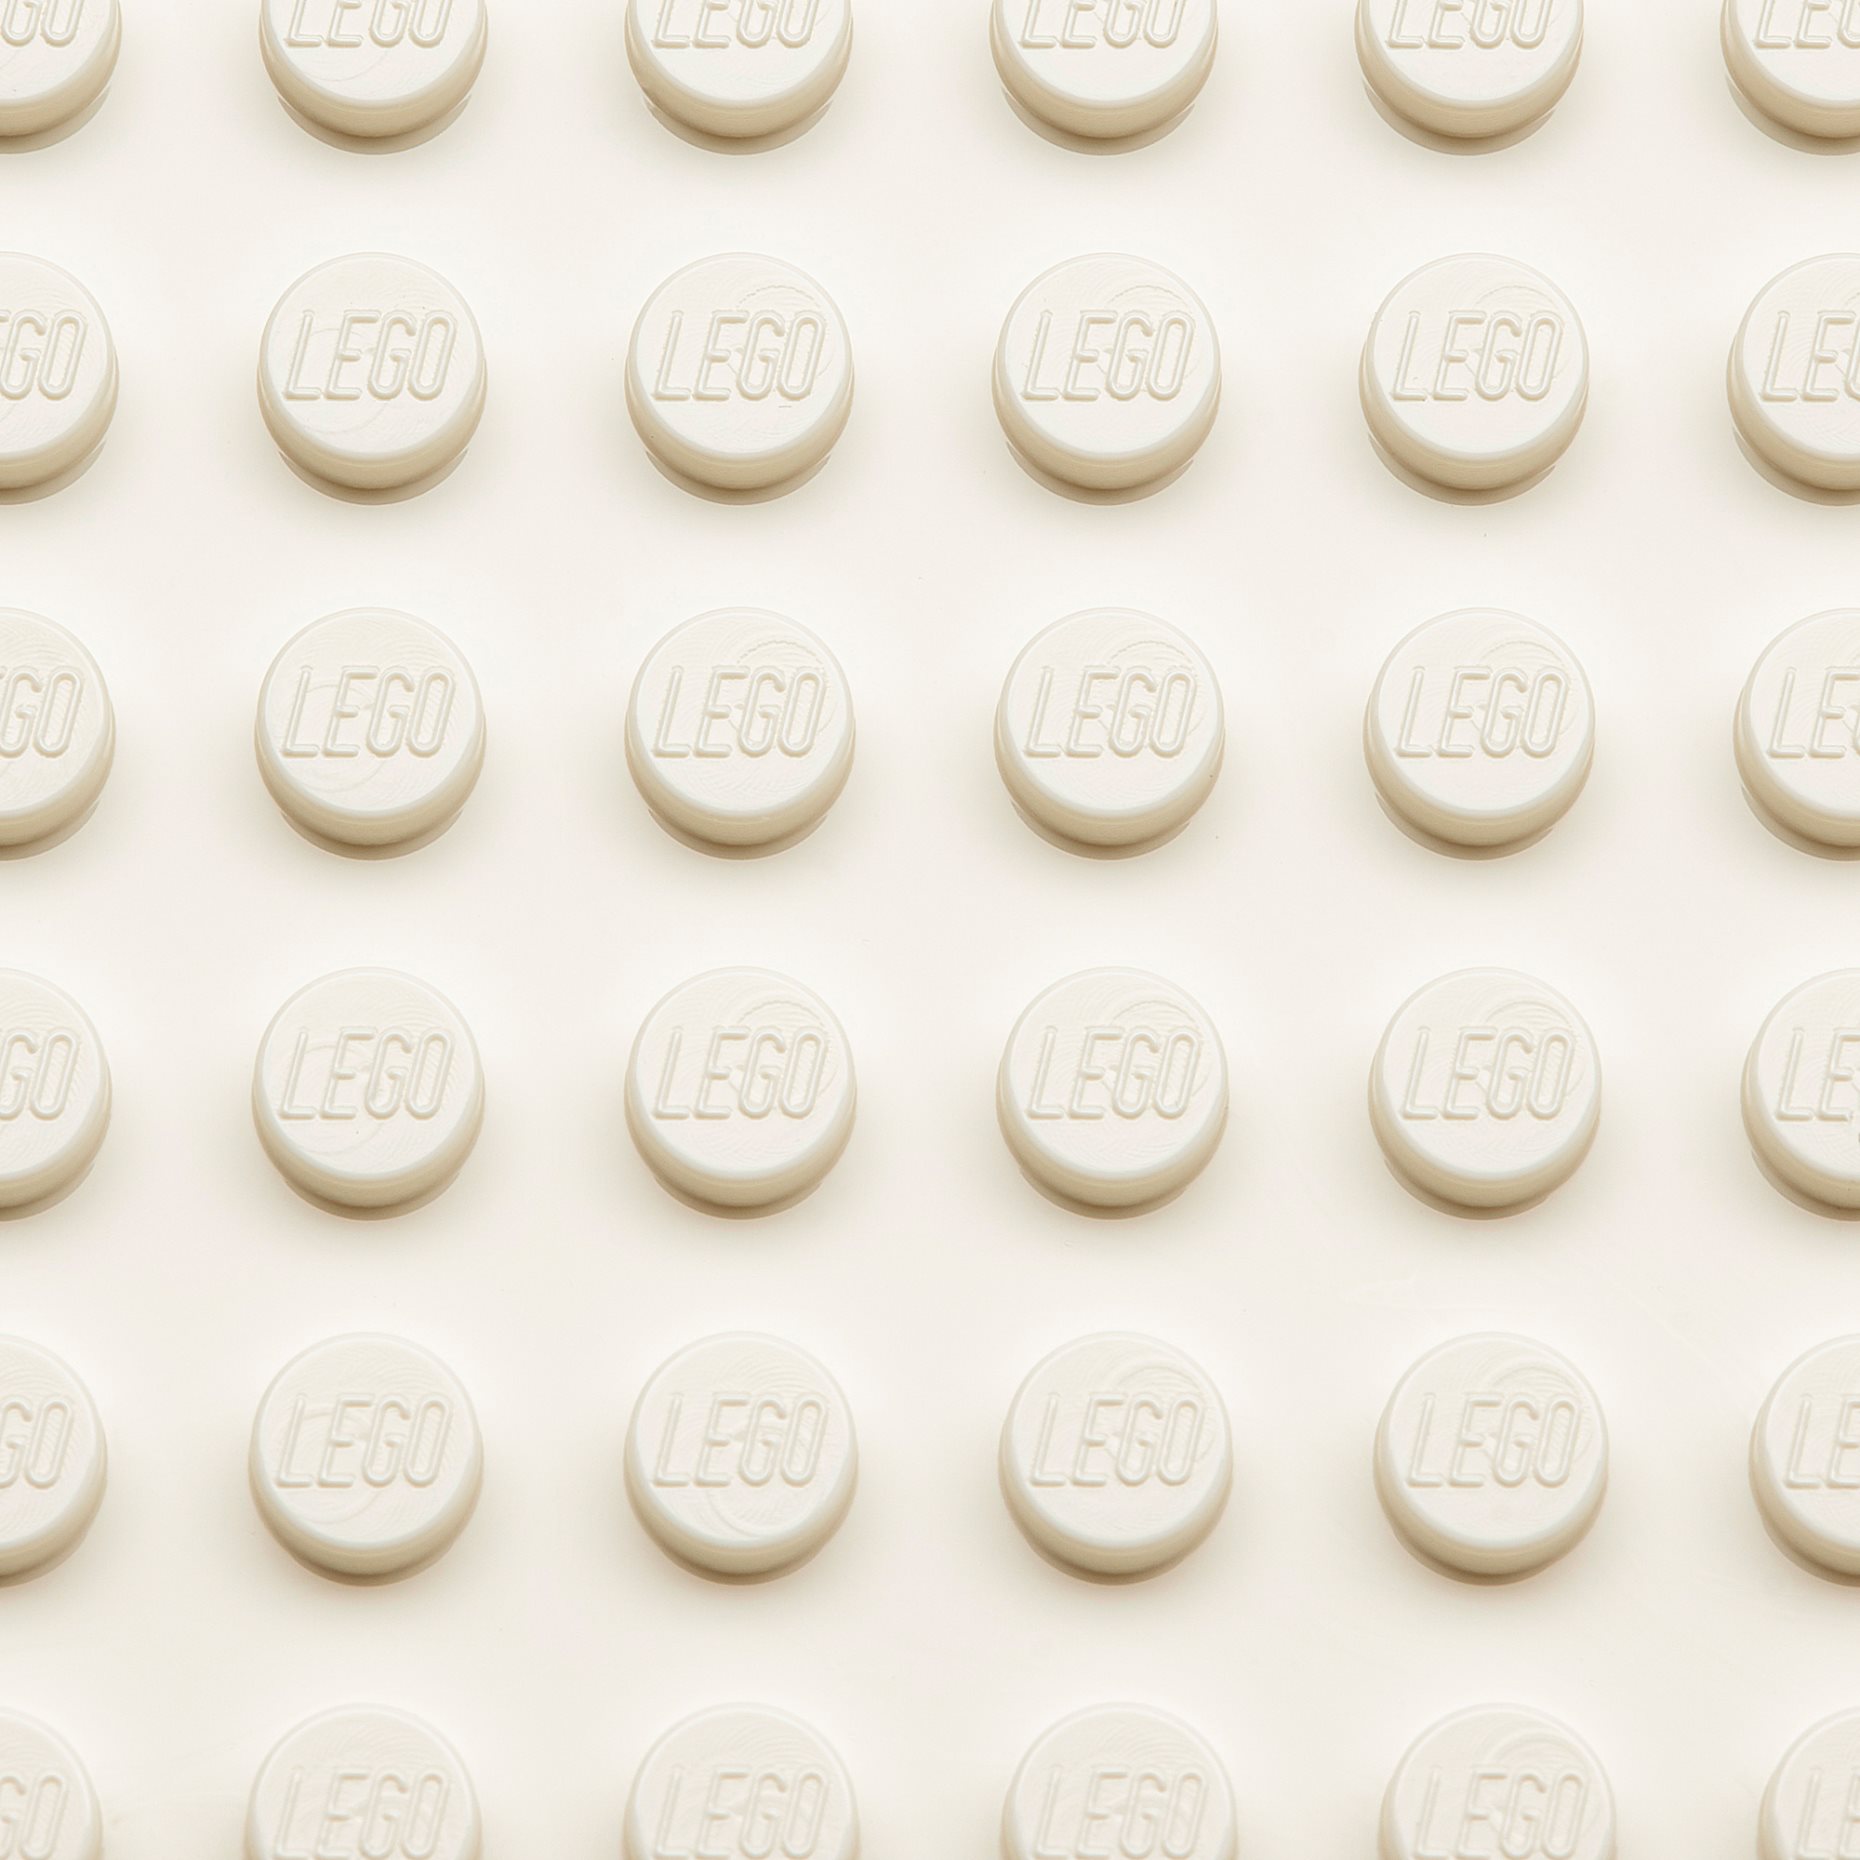 BYGGLEK, LEGO® кутия с капак, 26x18x12 см, 503.721.87